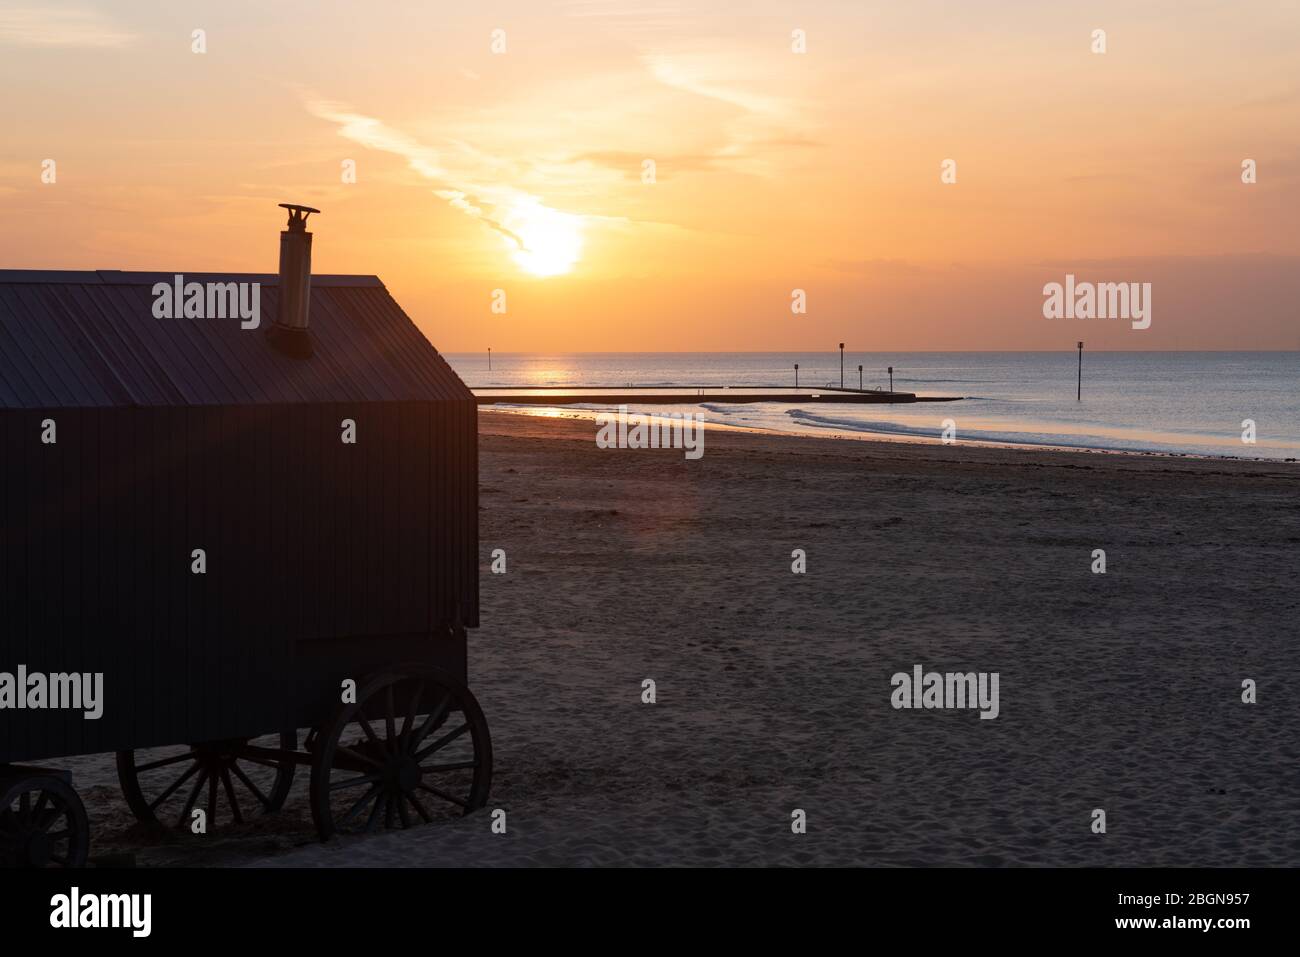 The Haekels sauna/bathing machine on Margate beach during Covid-19 lockdown, April 2020 Stock Photo